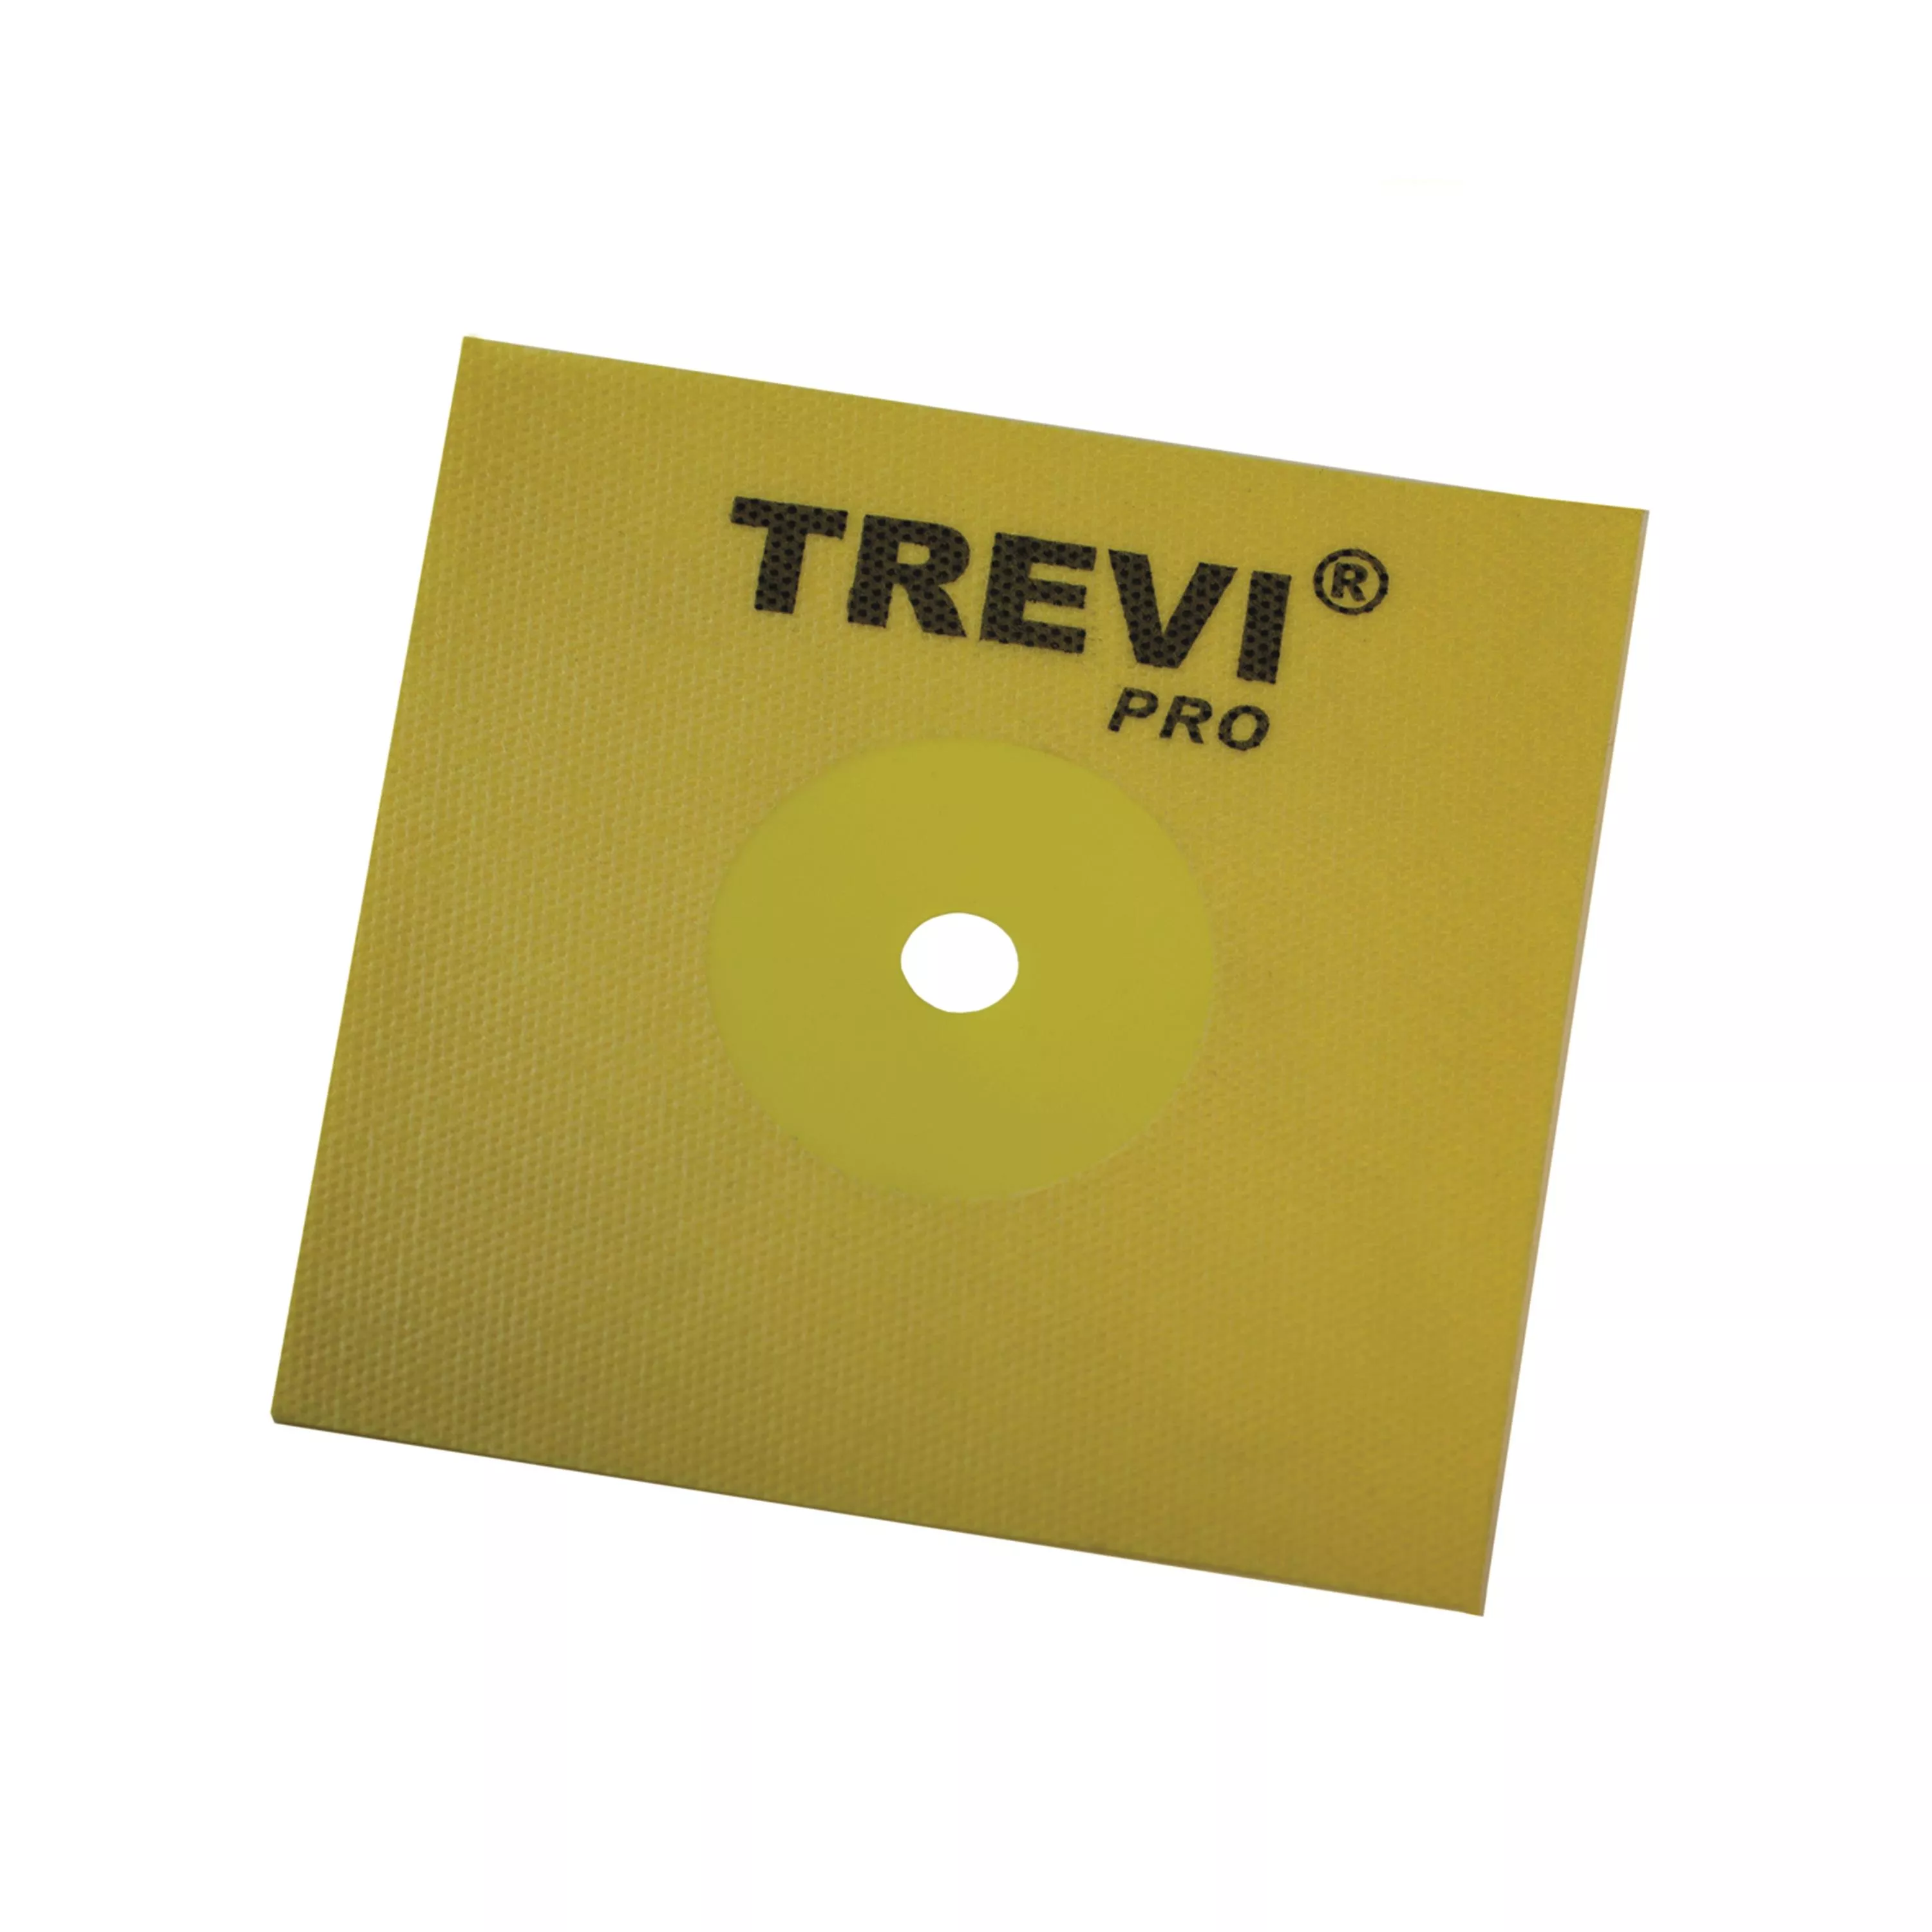 Trevi Pro pivot zones sealing sleeve wall